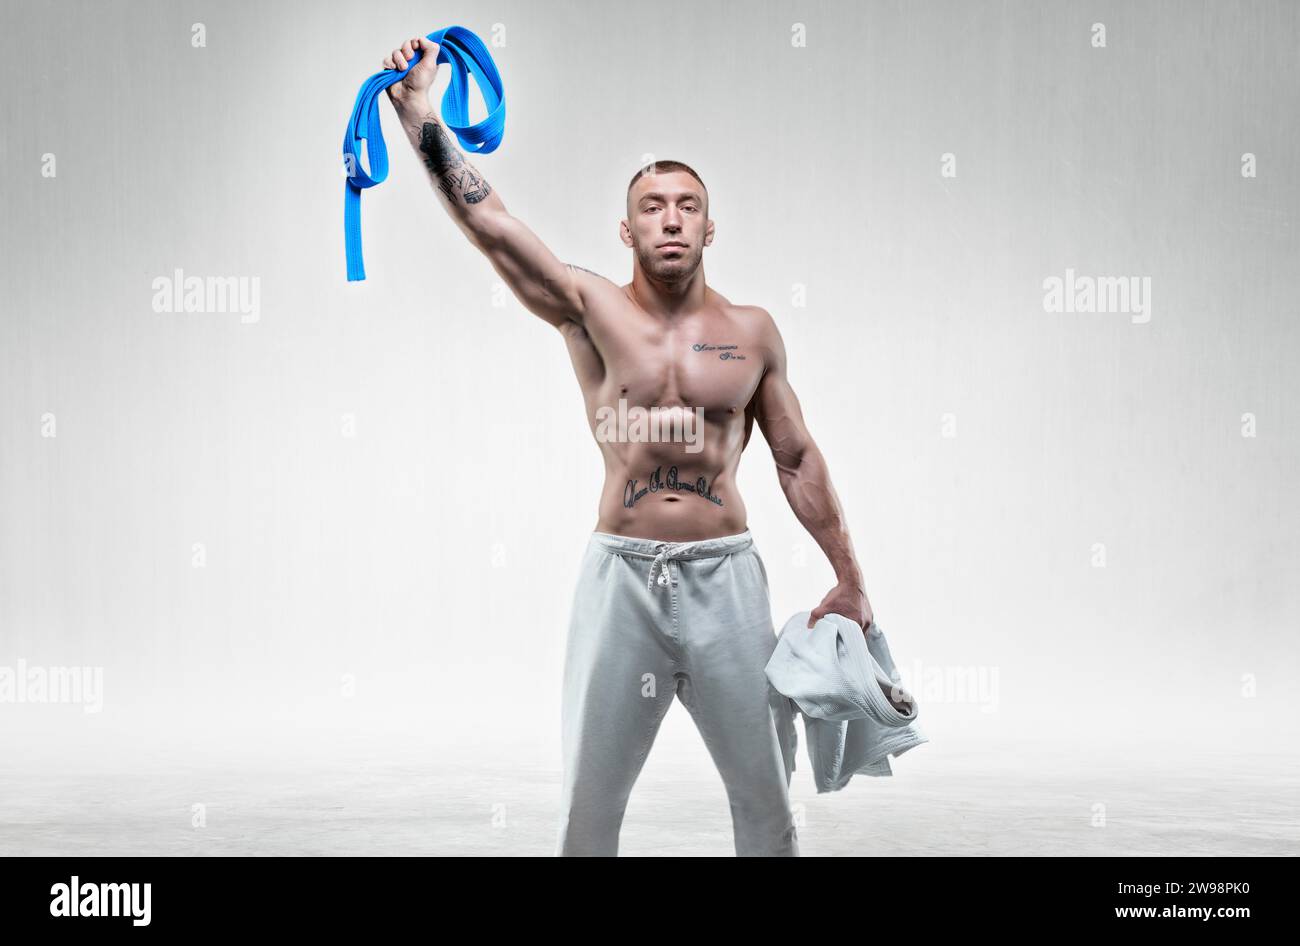 The athlete triumphantly lifts the blue belt up. Concept of karate, sambo, jujitsu. Mixed media Stock Photo